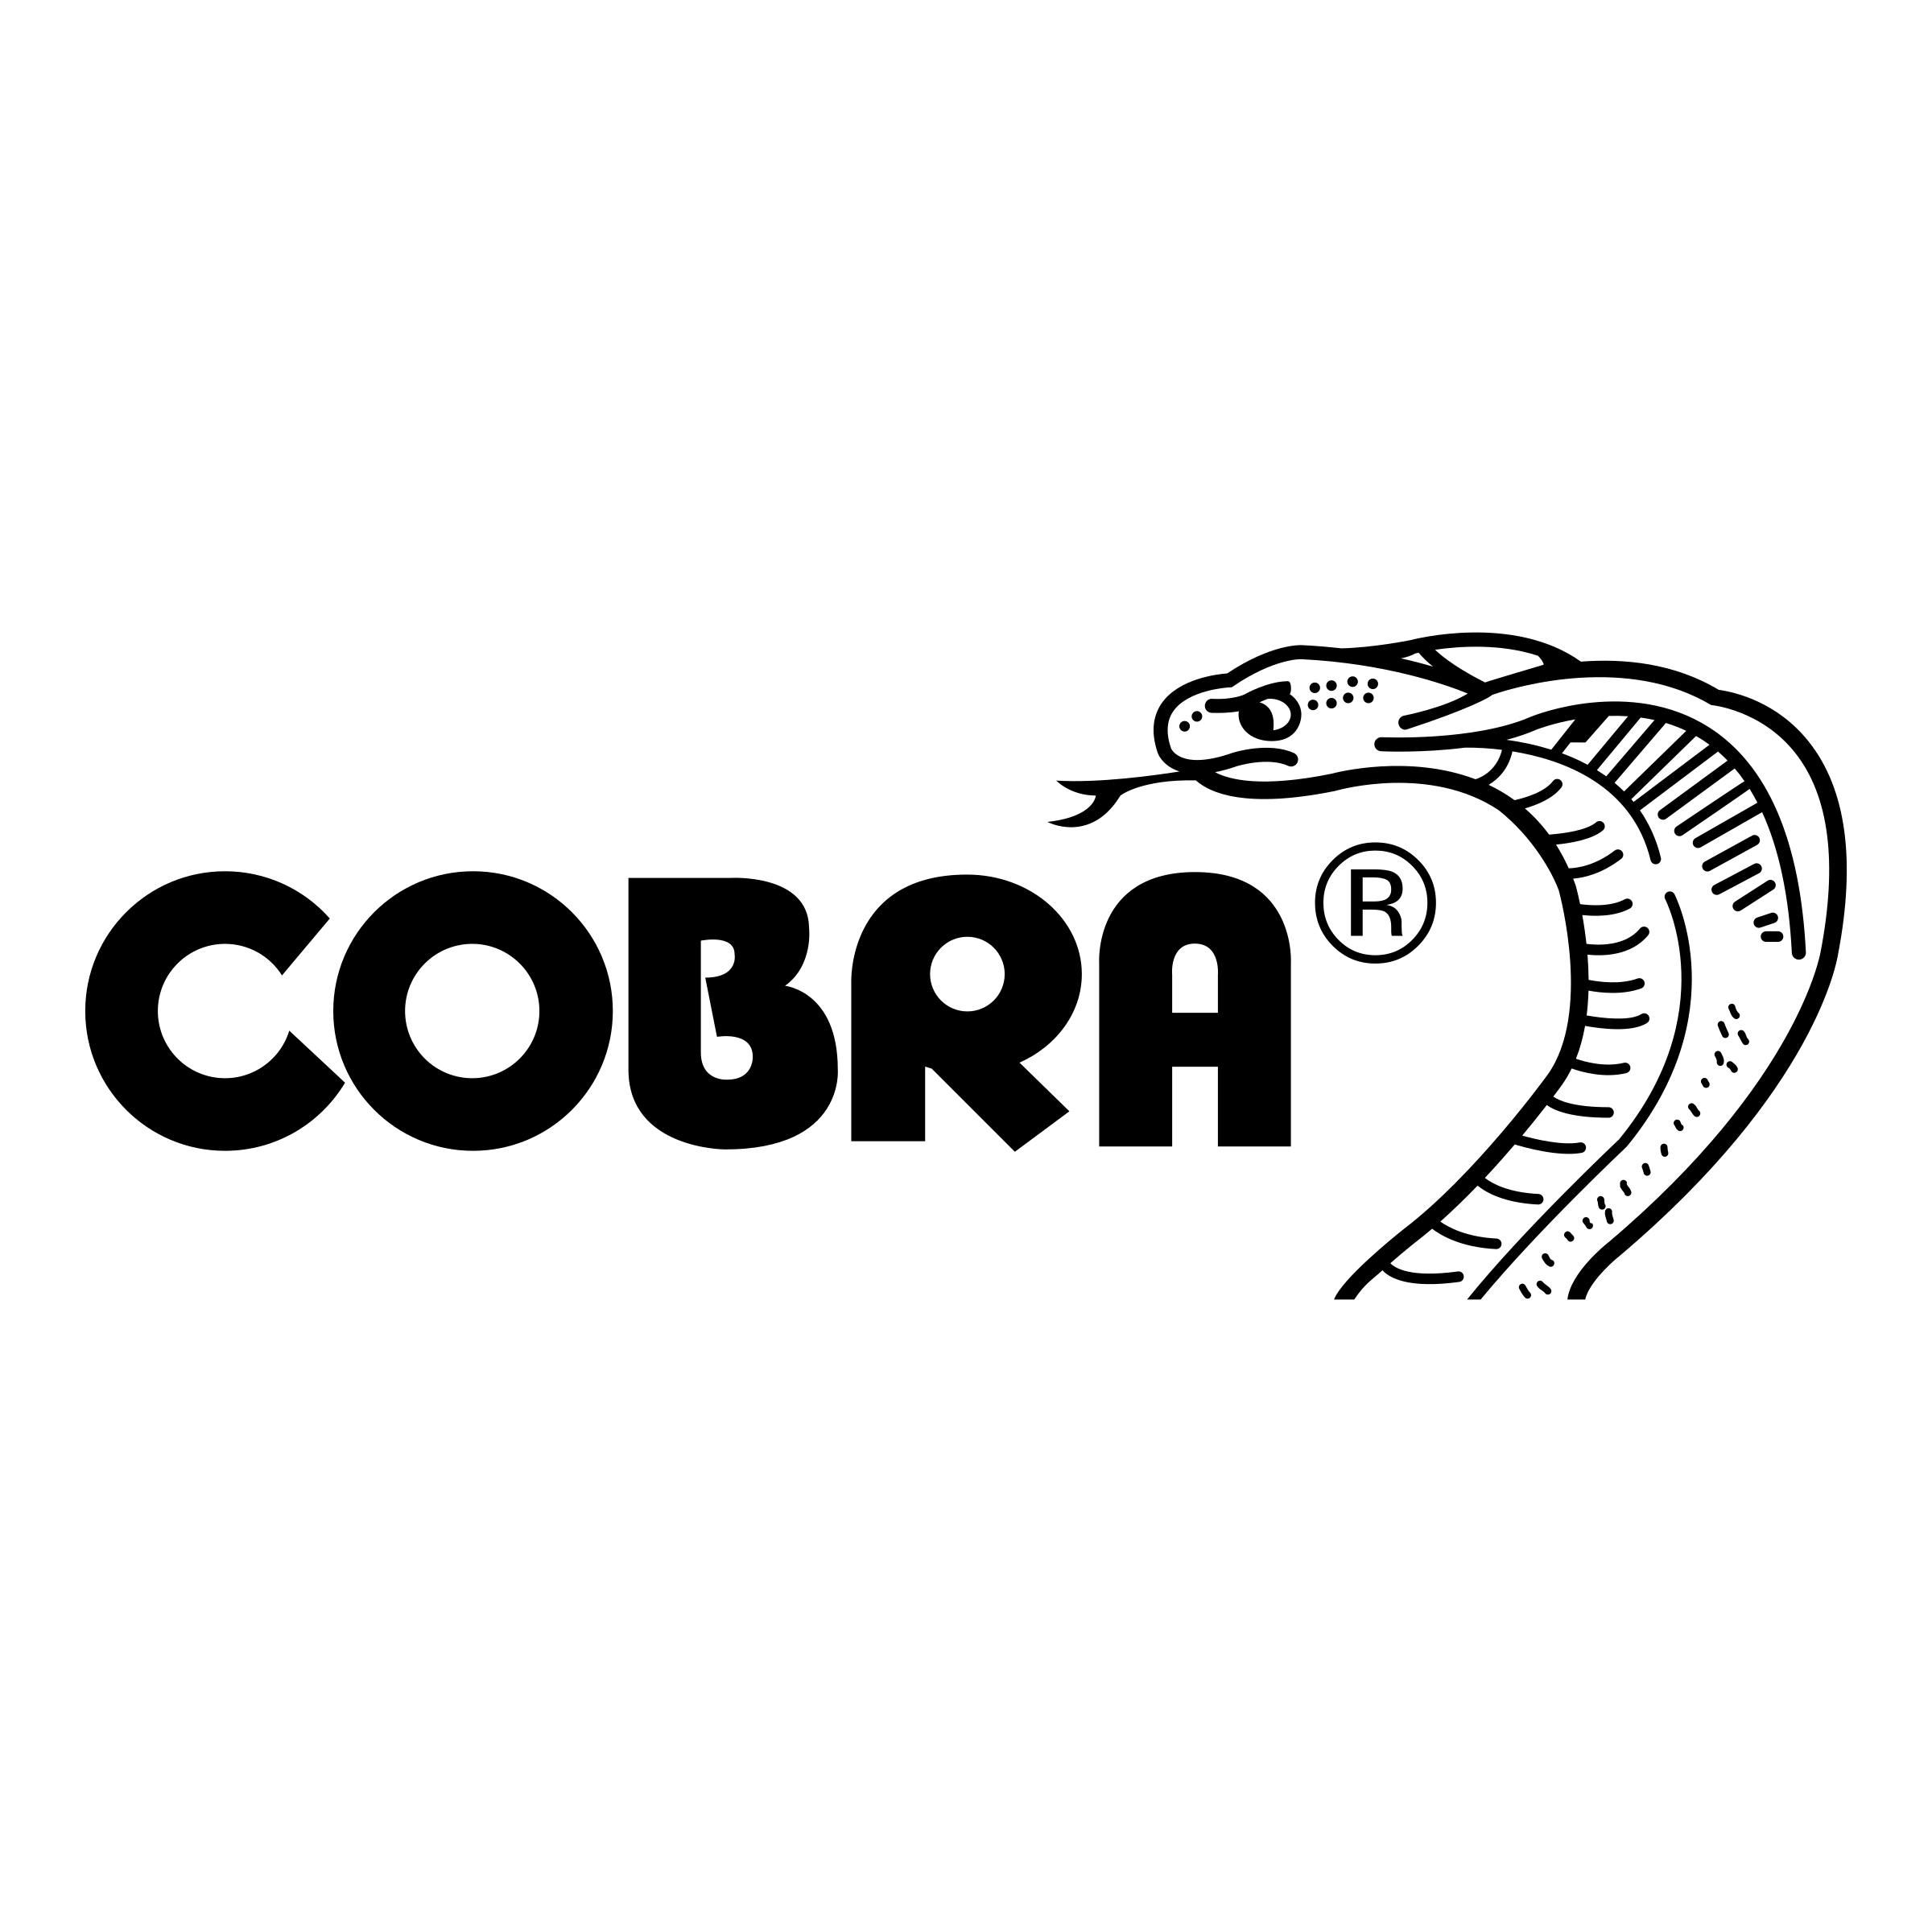 Cobra Logo - Cobra Logo PNG Transparent & SVG Vector